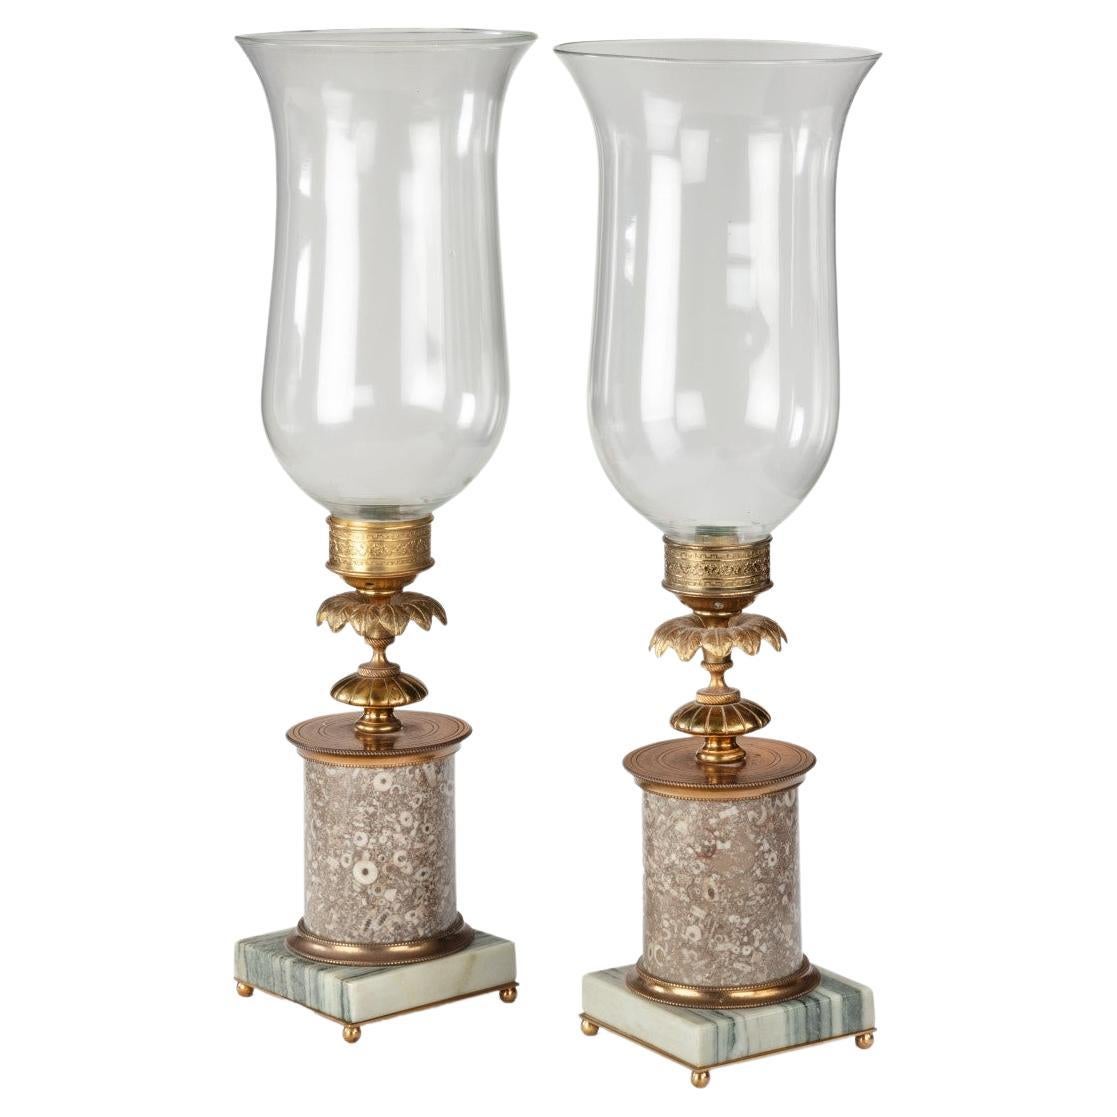 Pair of Decorative Storm Lamps